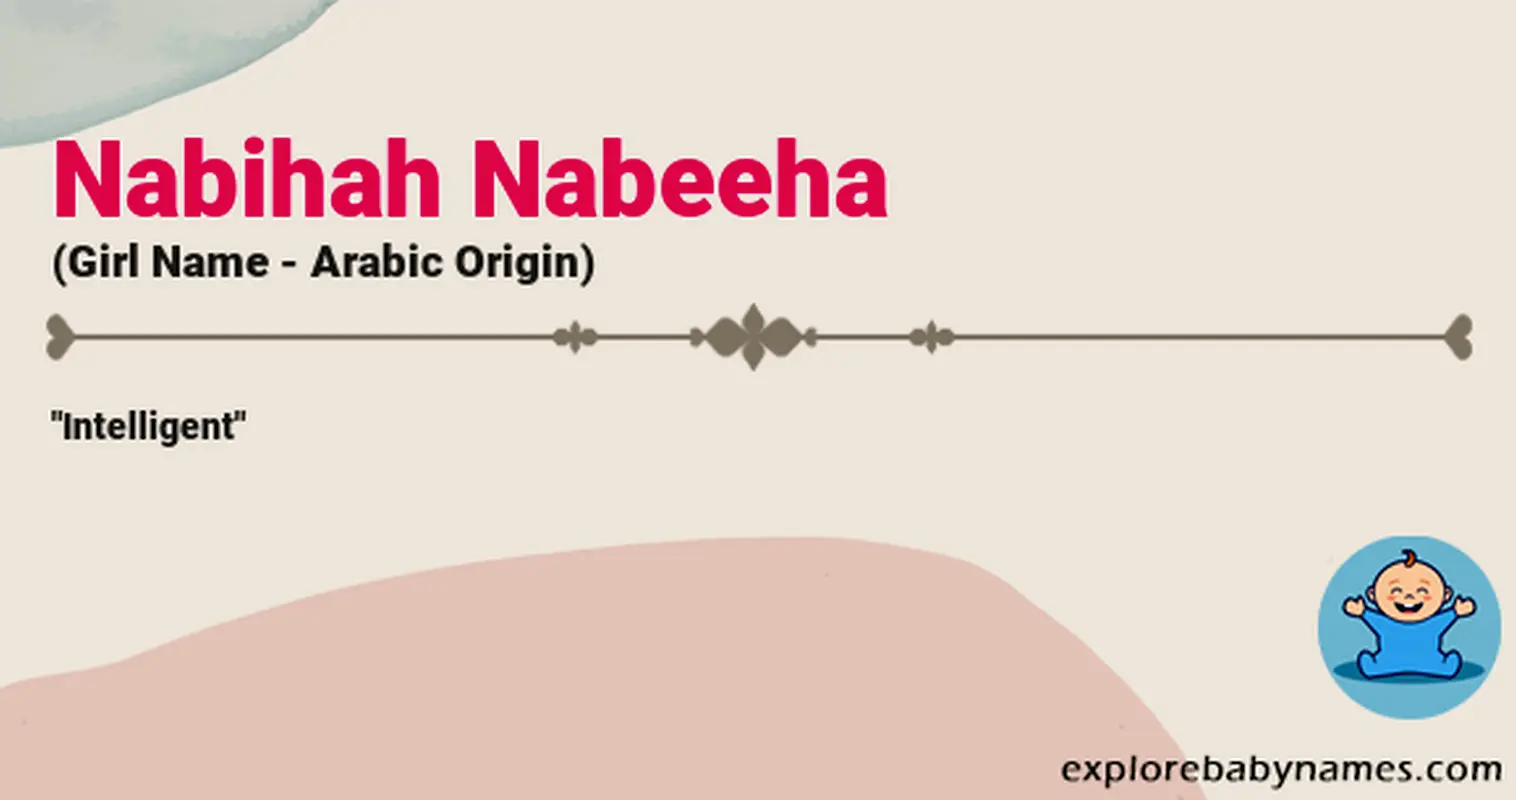 Meaning of Nabihah Nabeeha